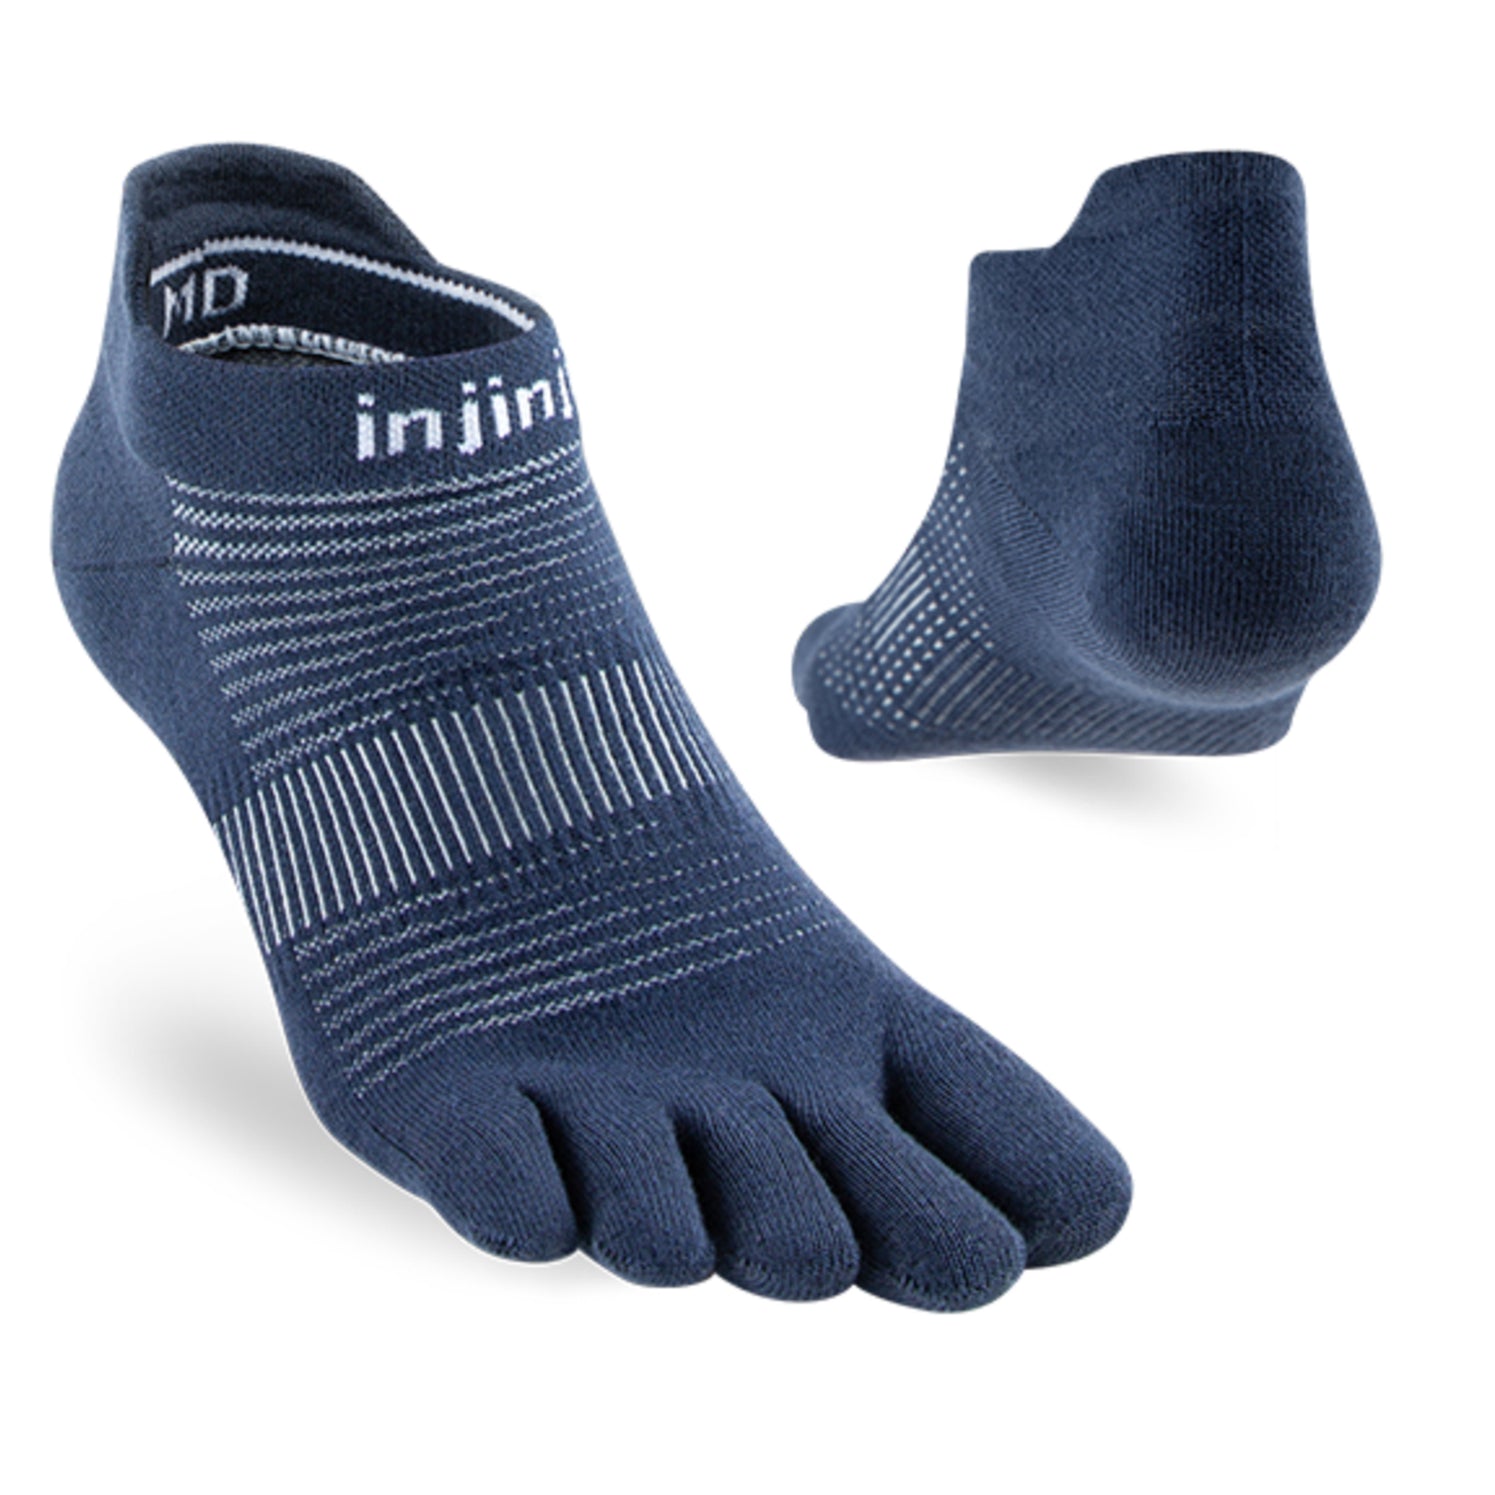 Injinji Performance Toesocks | Injinji Socks Australia — socksforliving.com